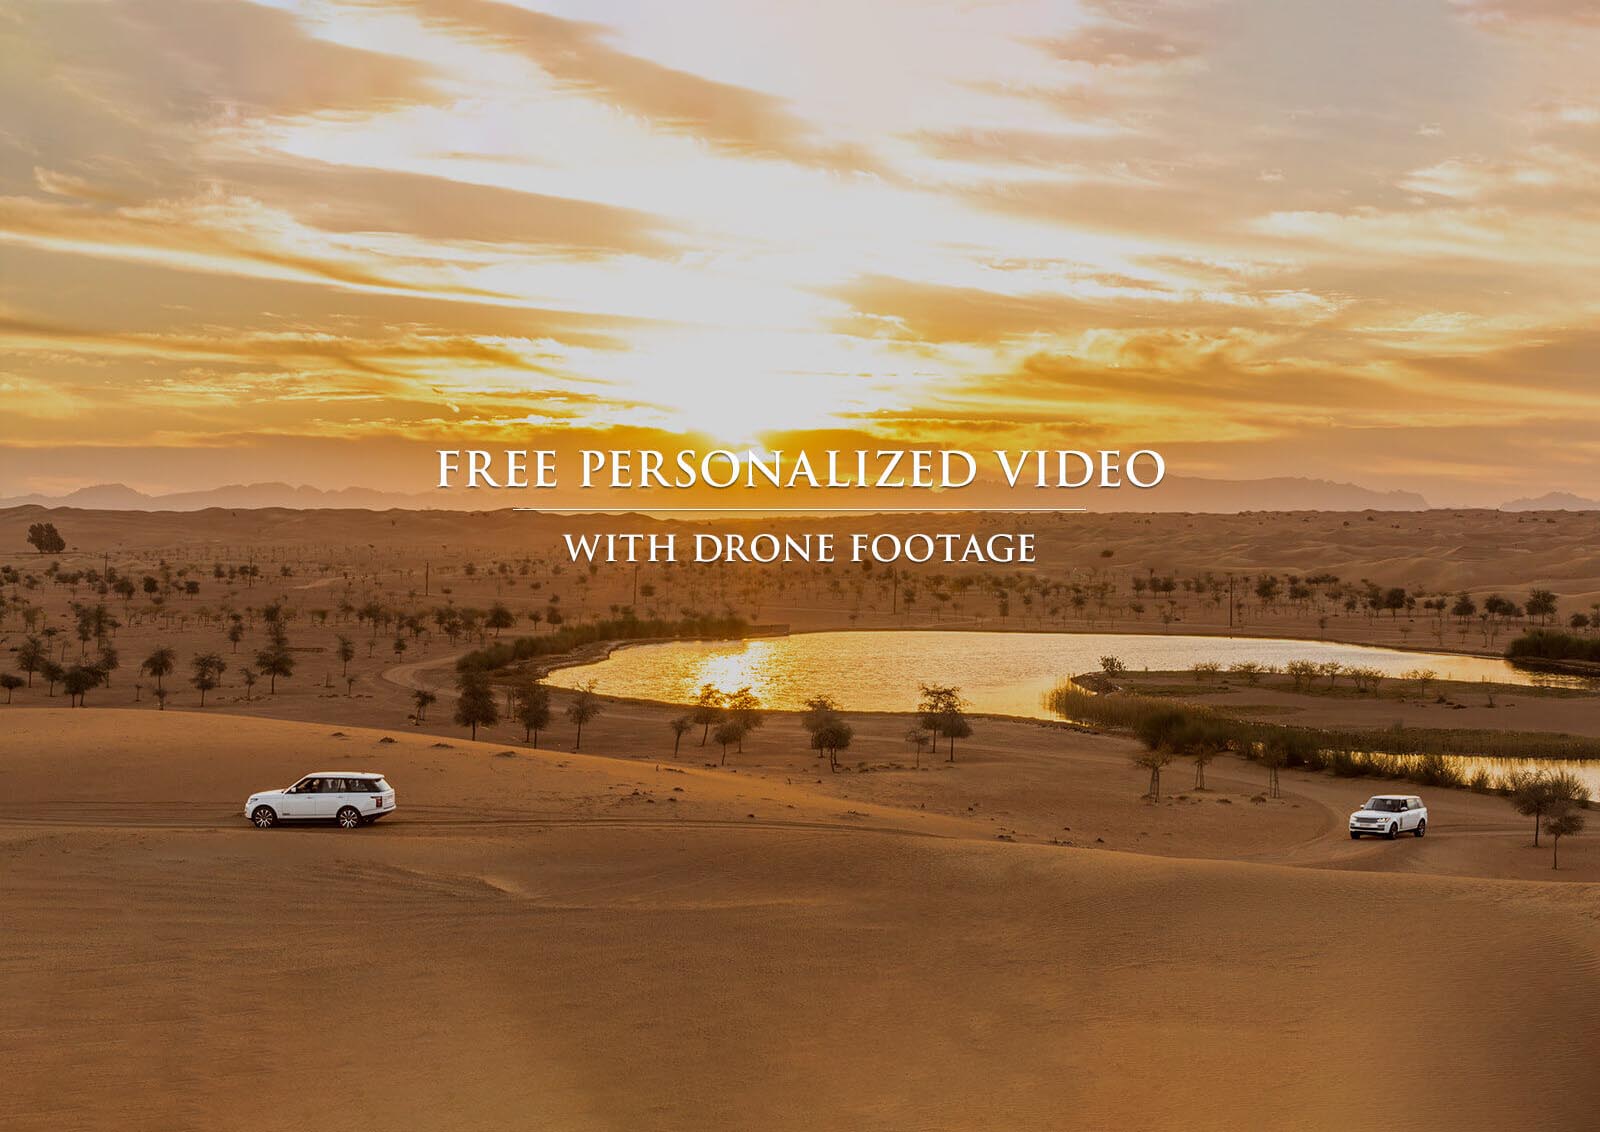 Free Desert Safari Video For Advance Bookings